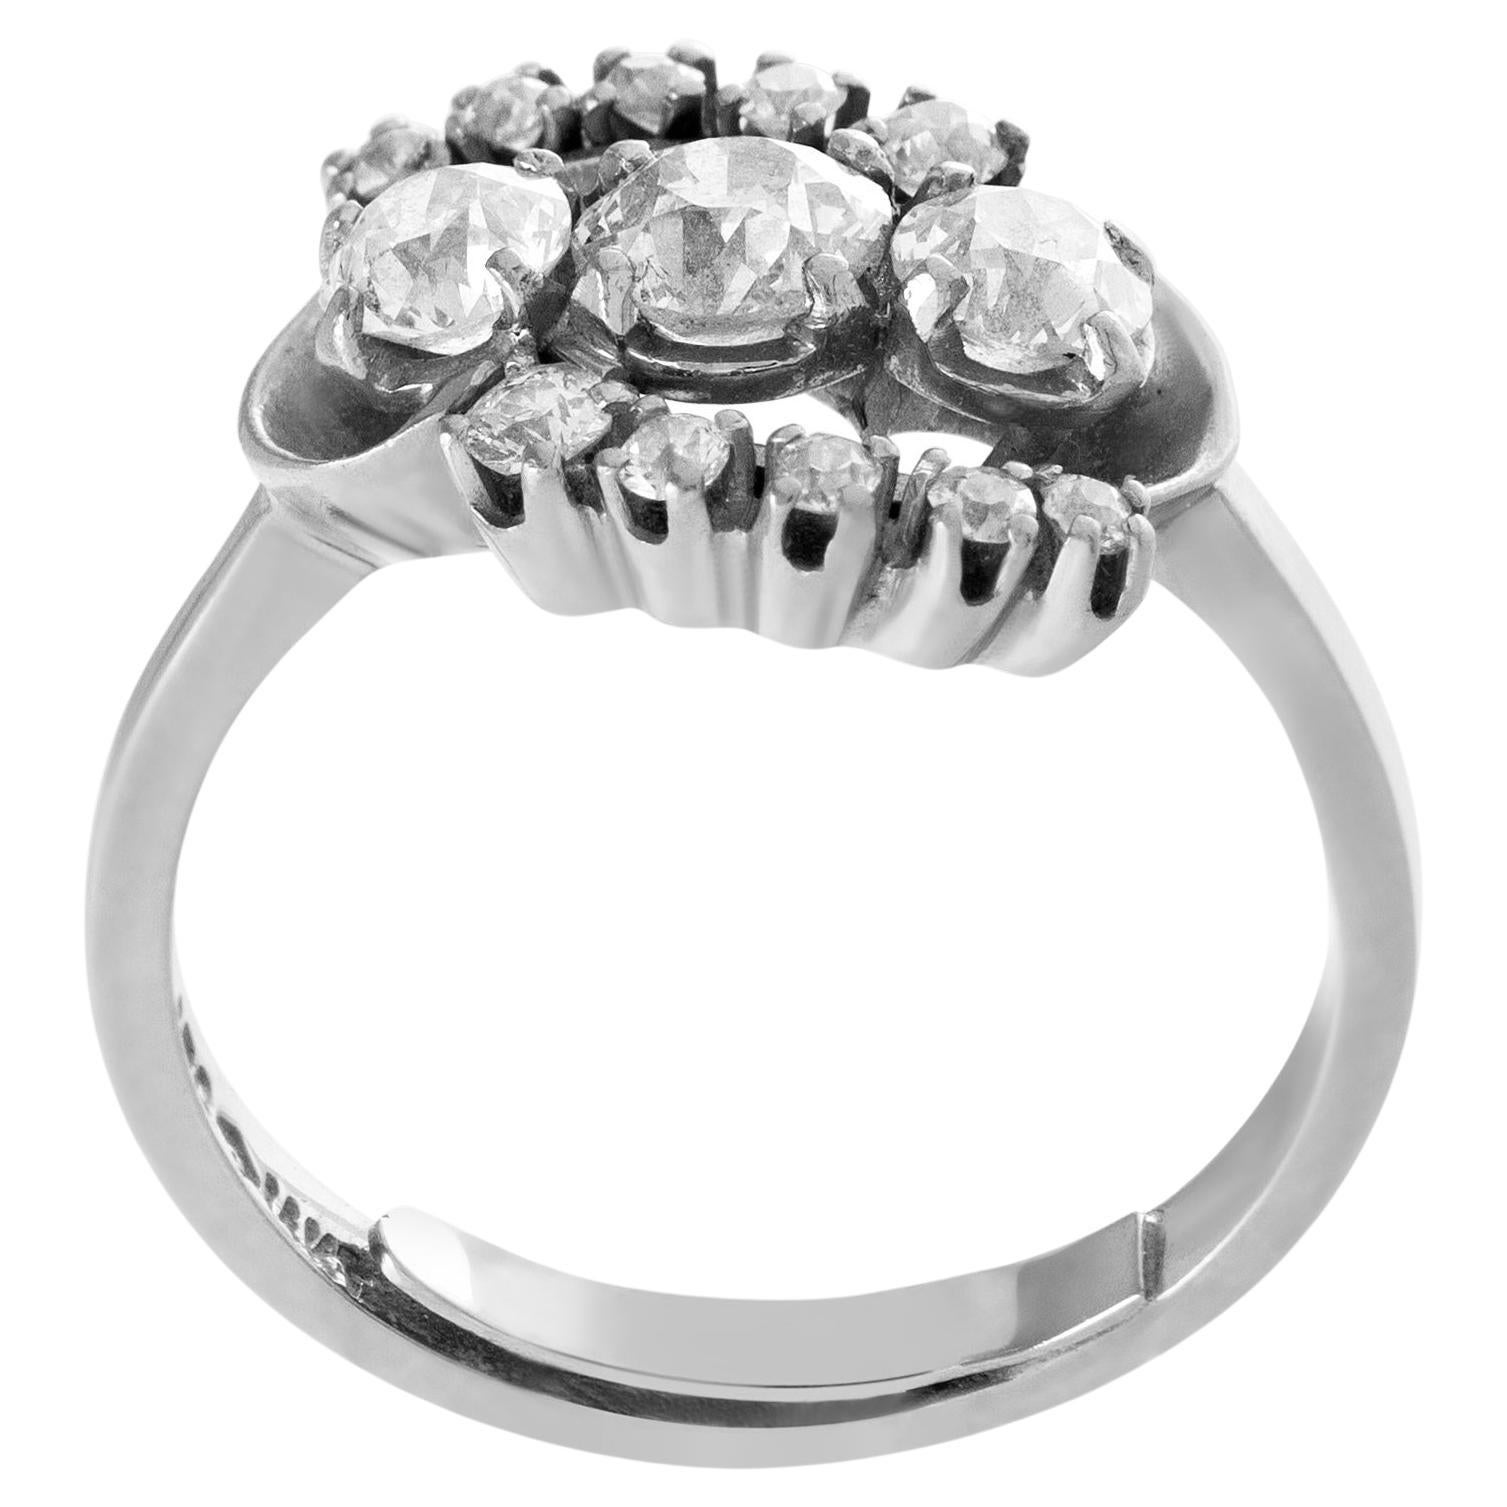 Diamond Ring Set in 14K White Gold, "past, Present, Future", 3 European Cut For Sale